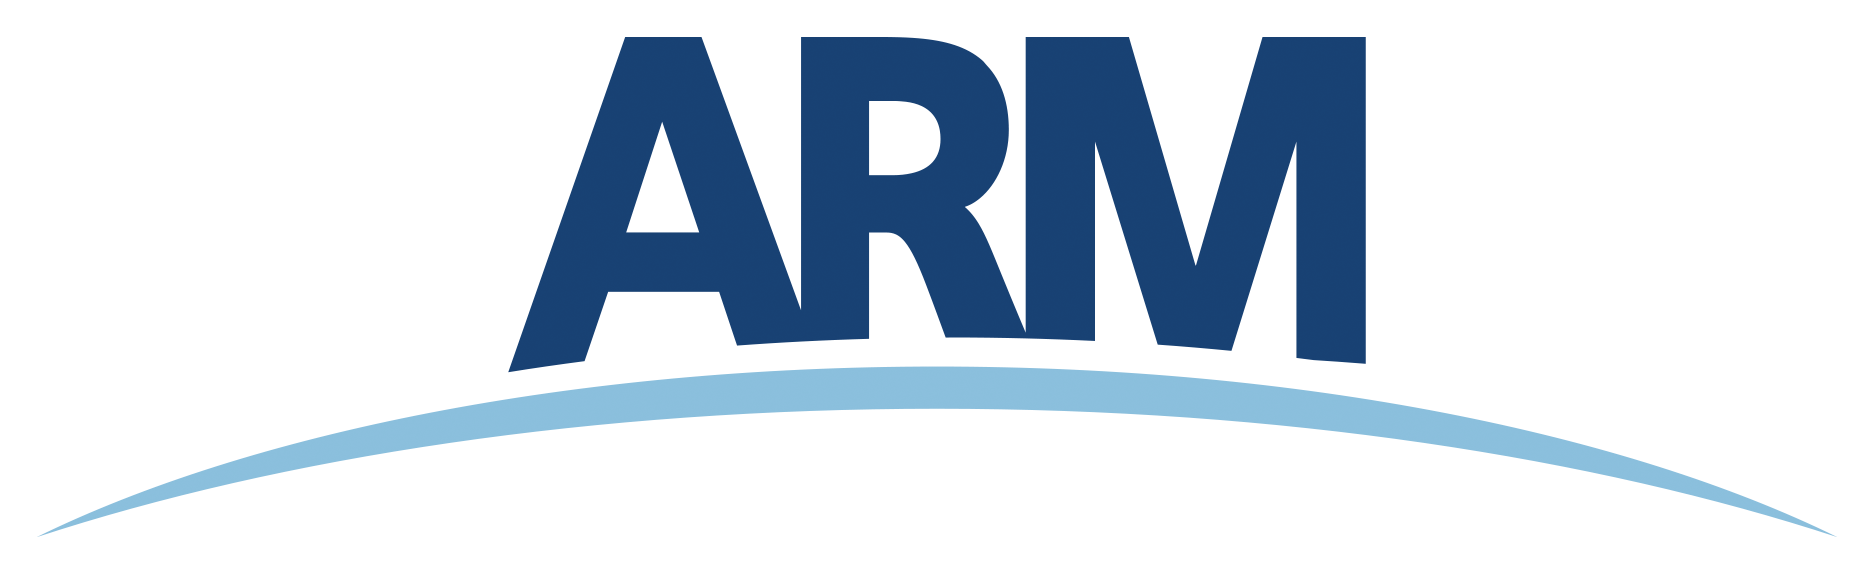 https://arm-development.github.io/open-science-rockies-2022/_static/arm_logo.png